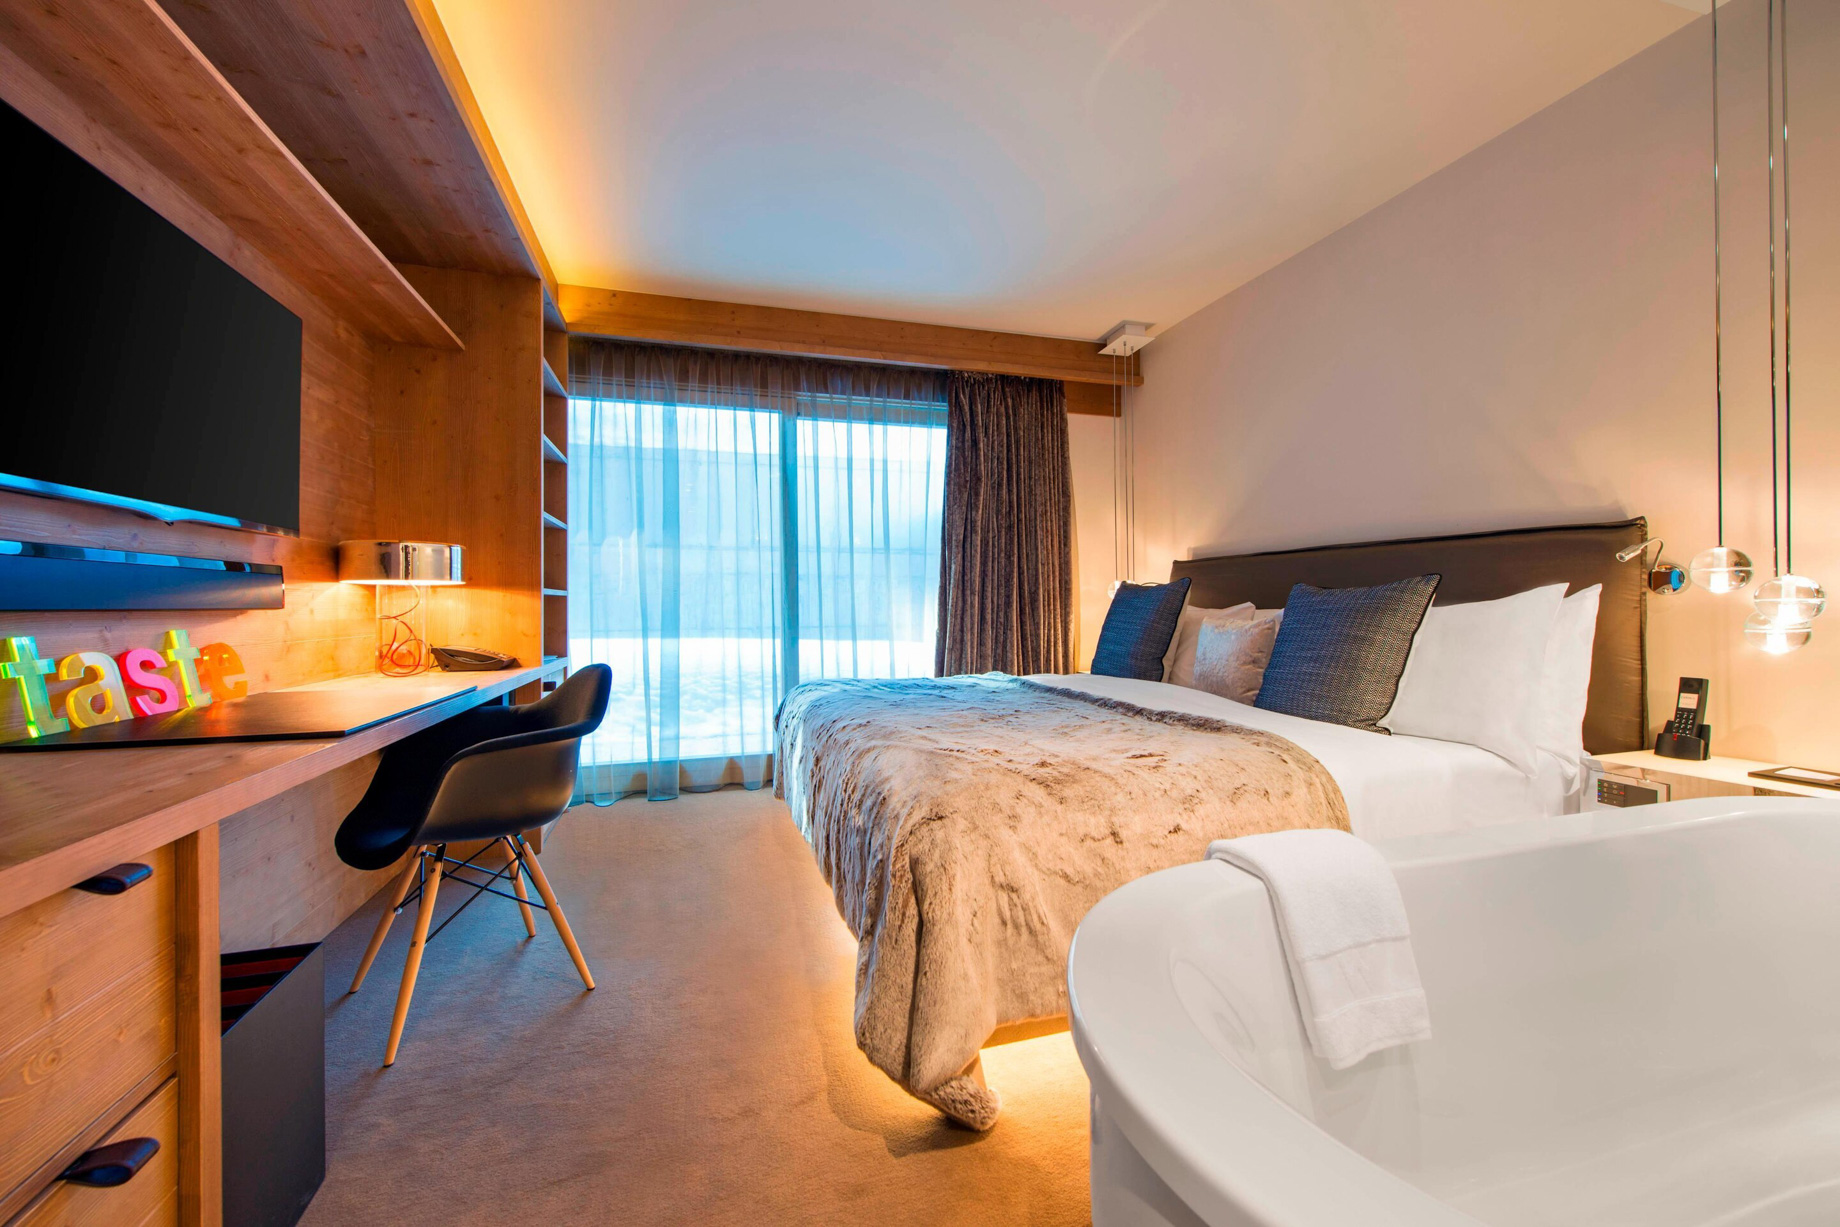 W Verbier Hotel - Verbier, Switzerland - Residence Bedroom Layout